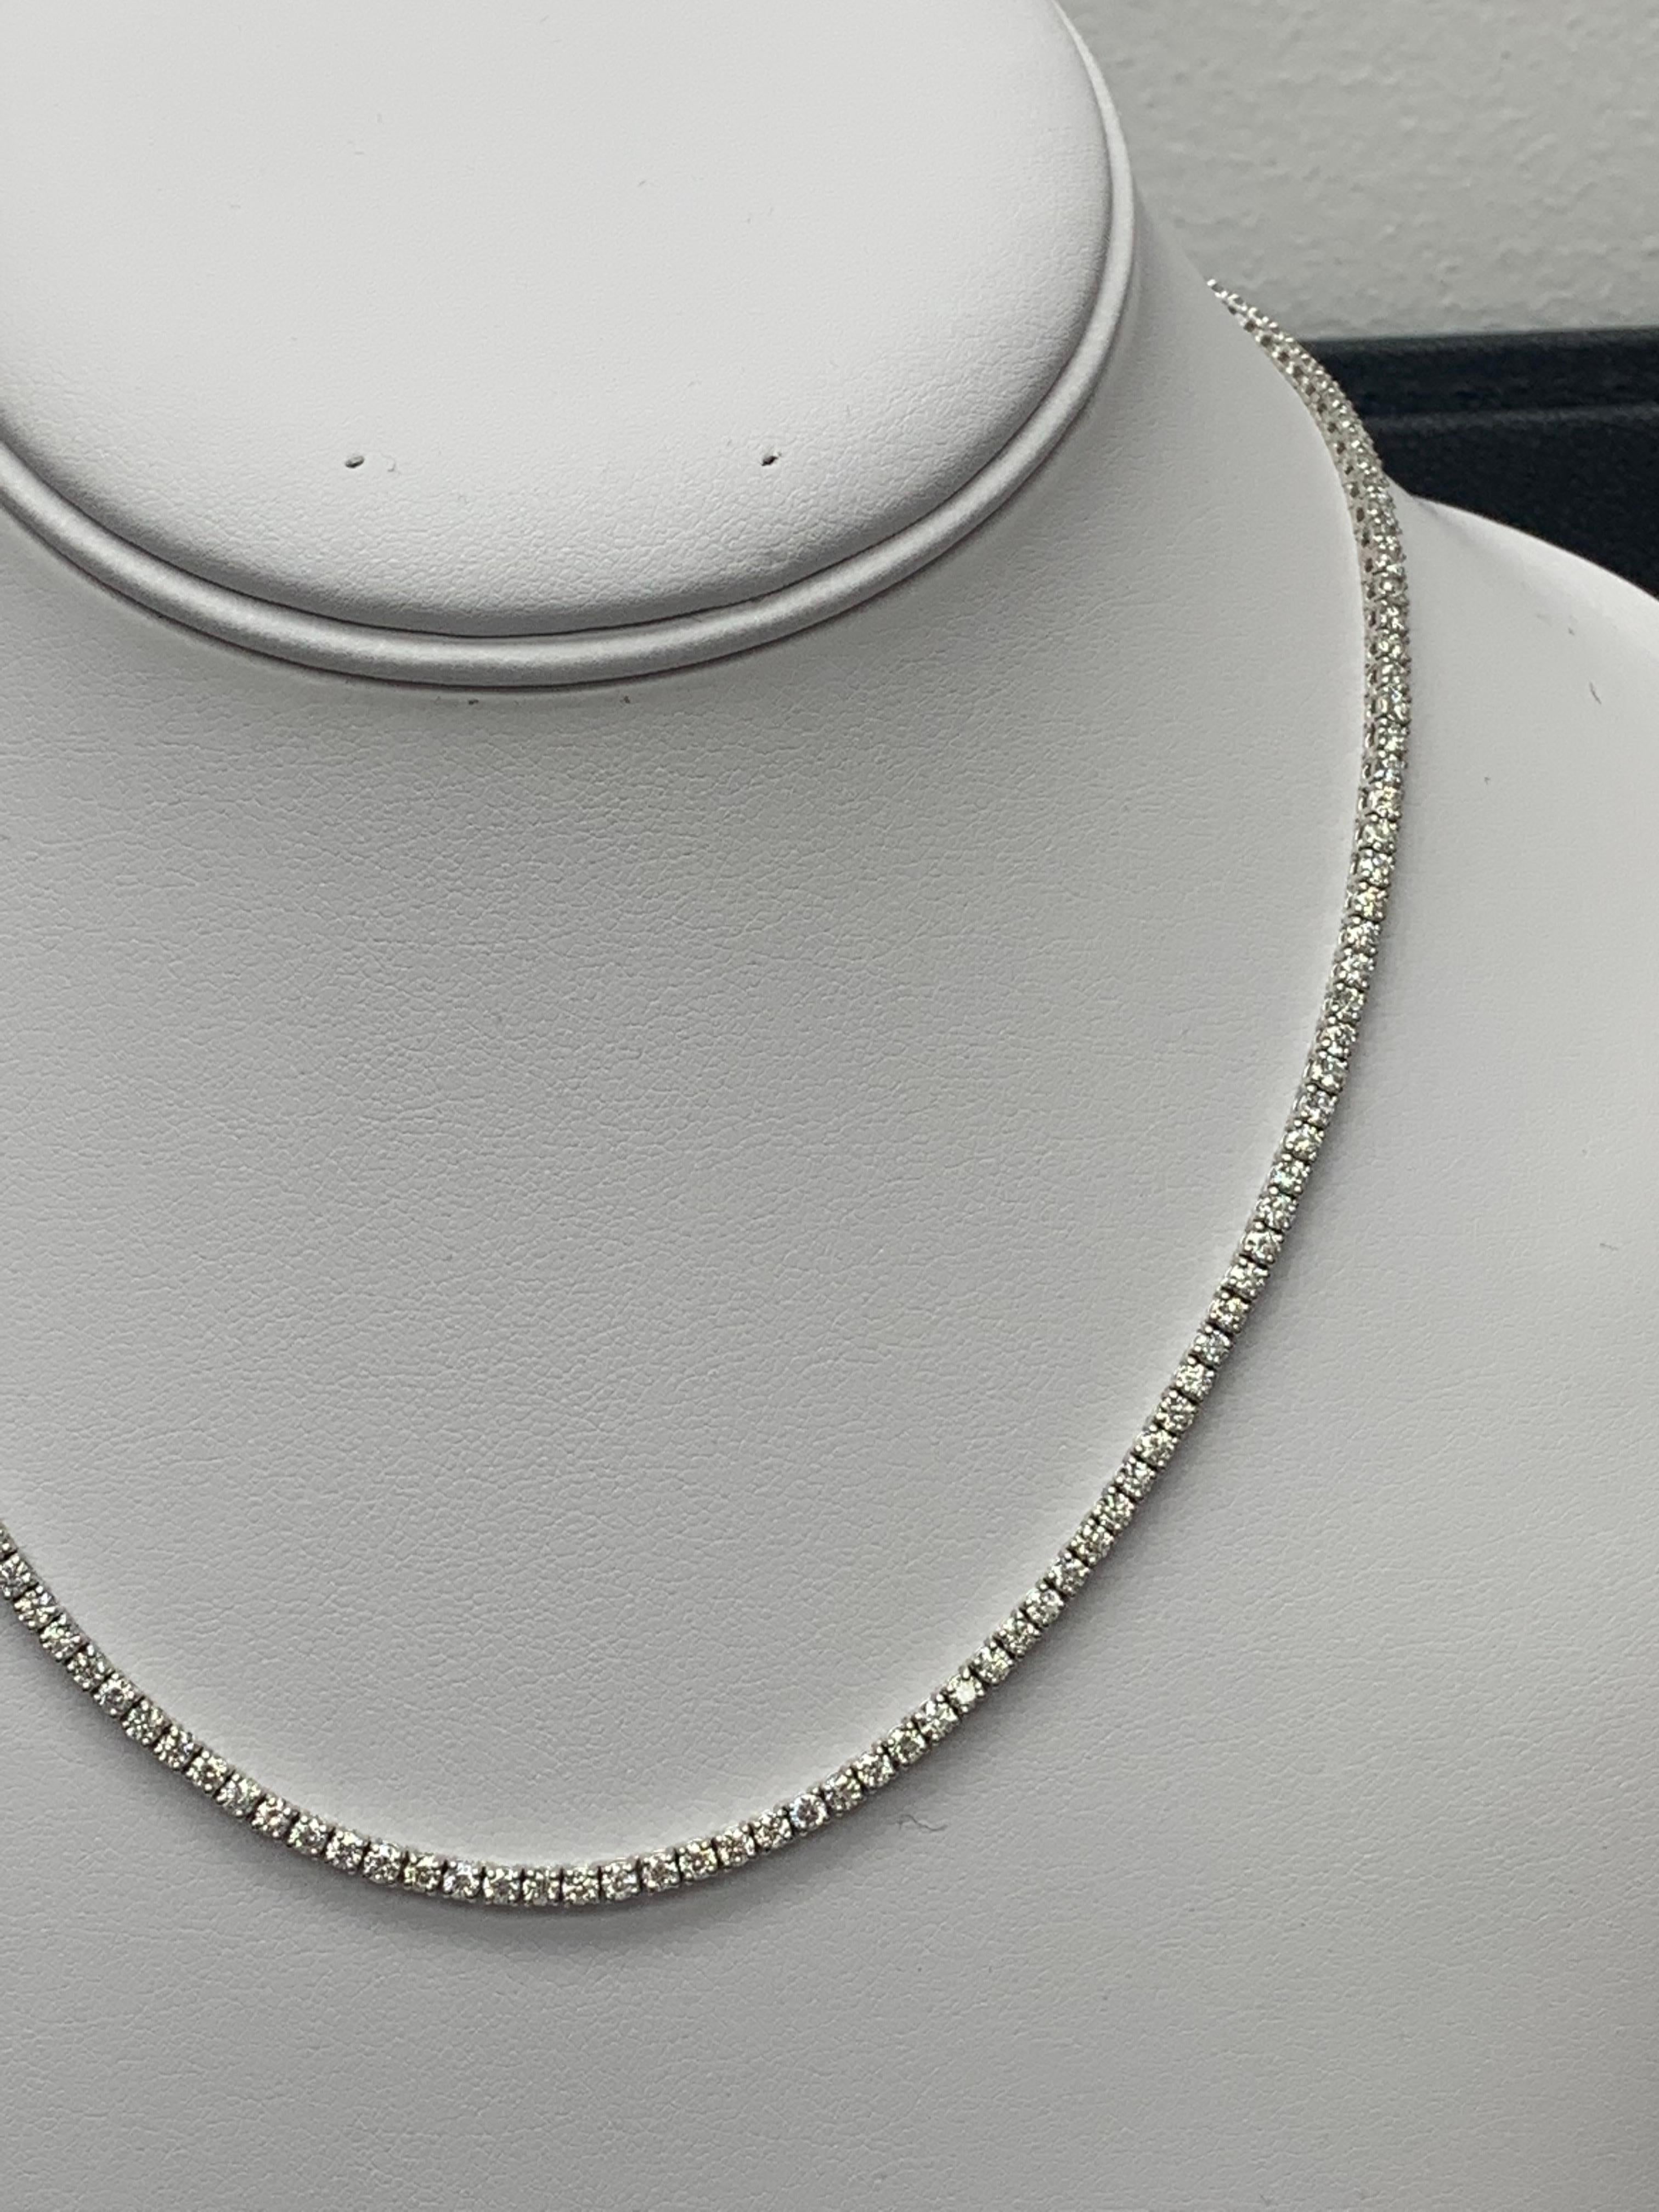 Brilliant Cut 11.31 Carat Diamond Tennis Necklace in 14K White Gold For Sale